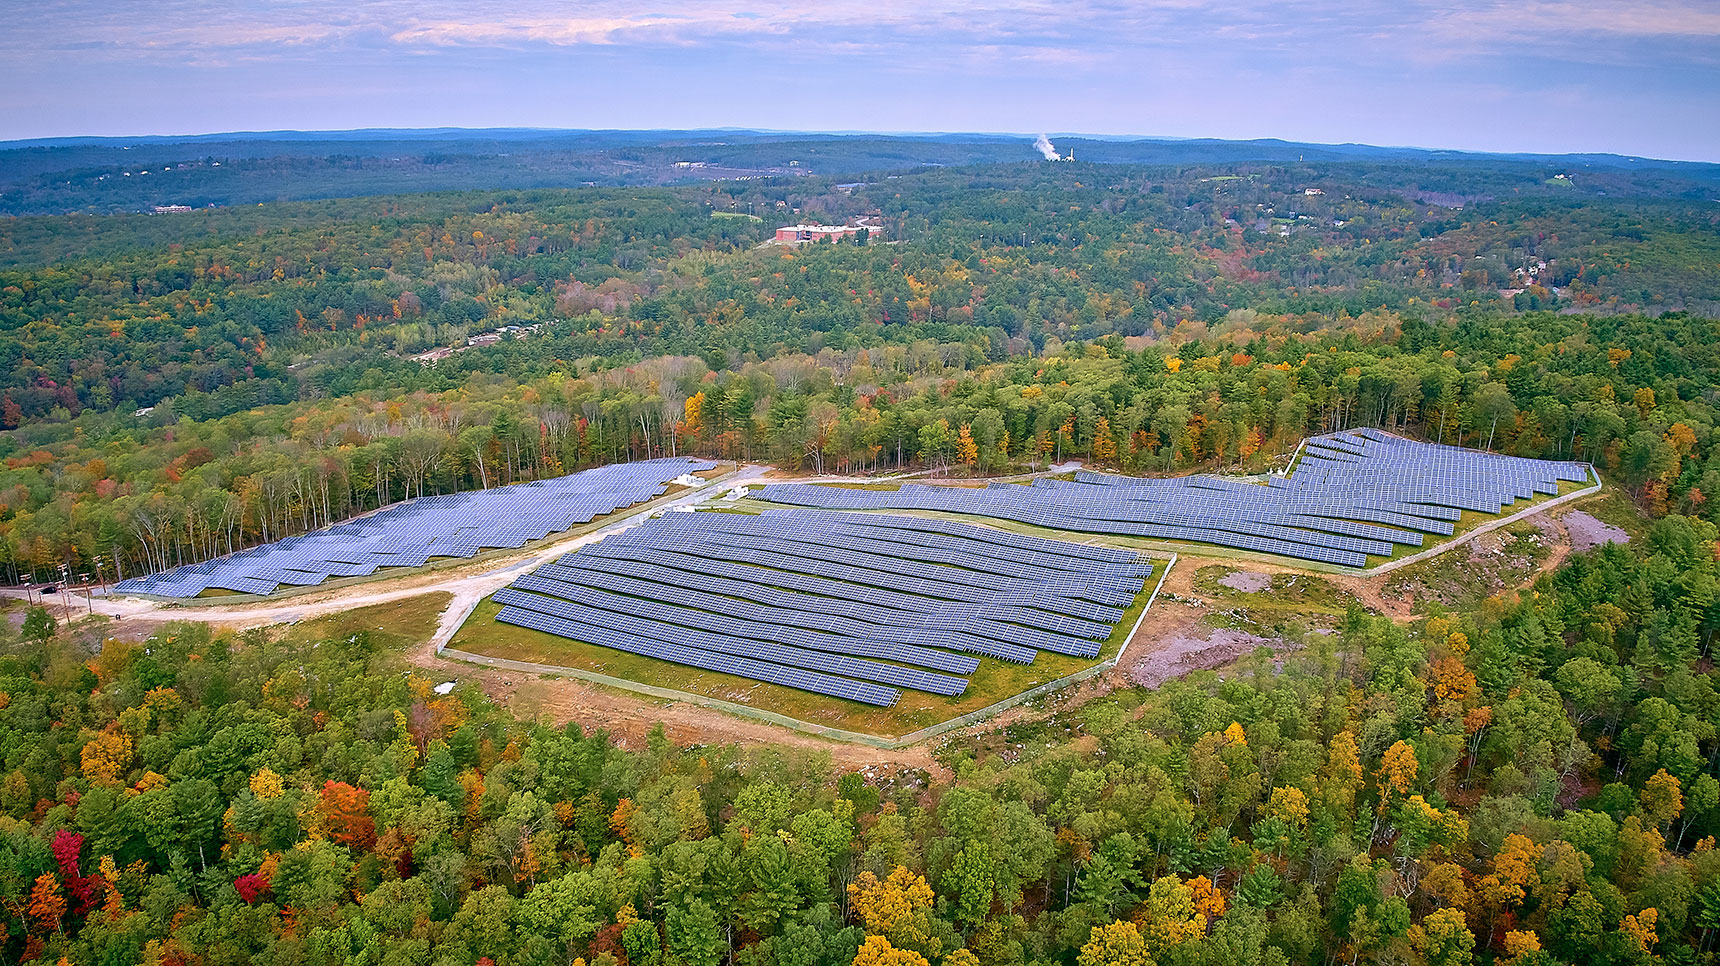 Aerial view of the solar array farm